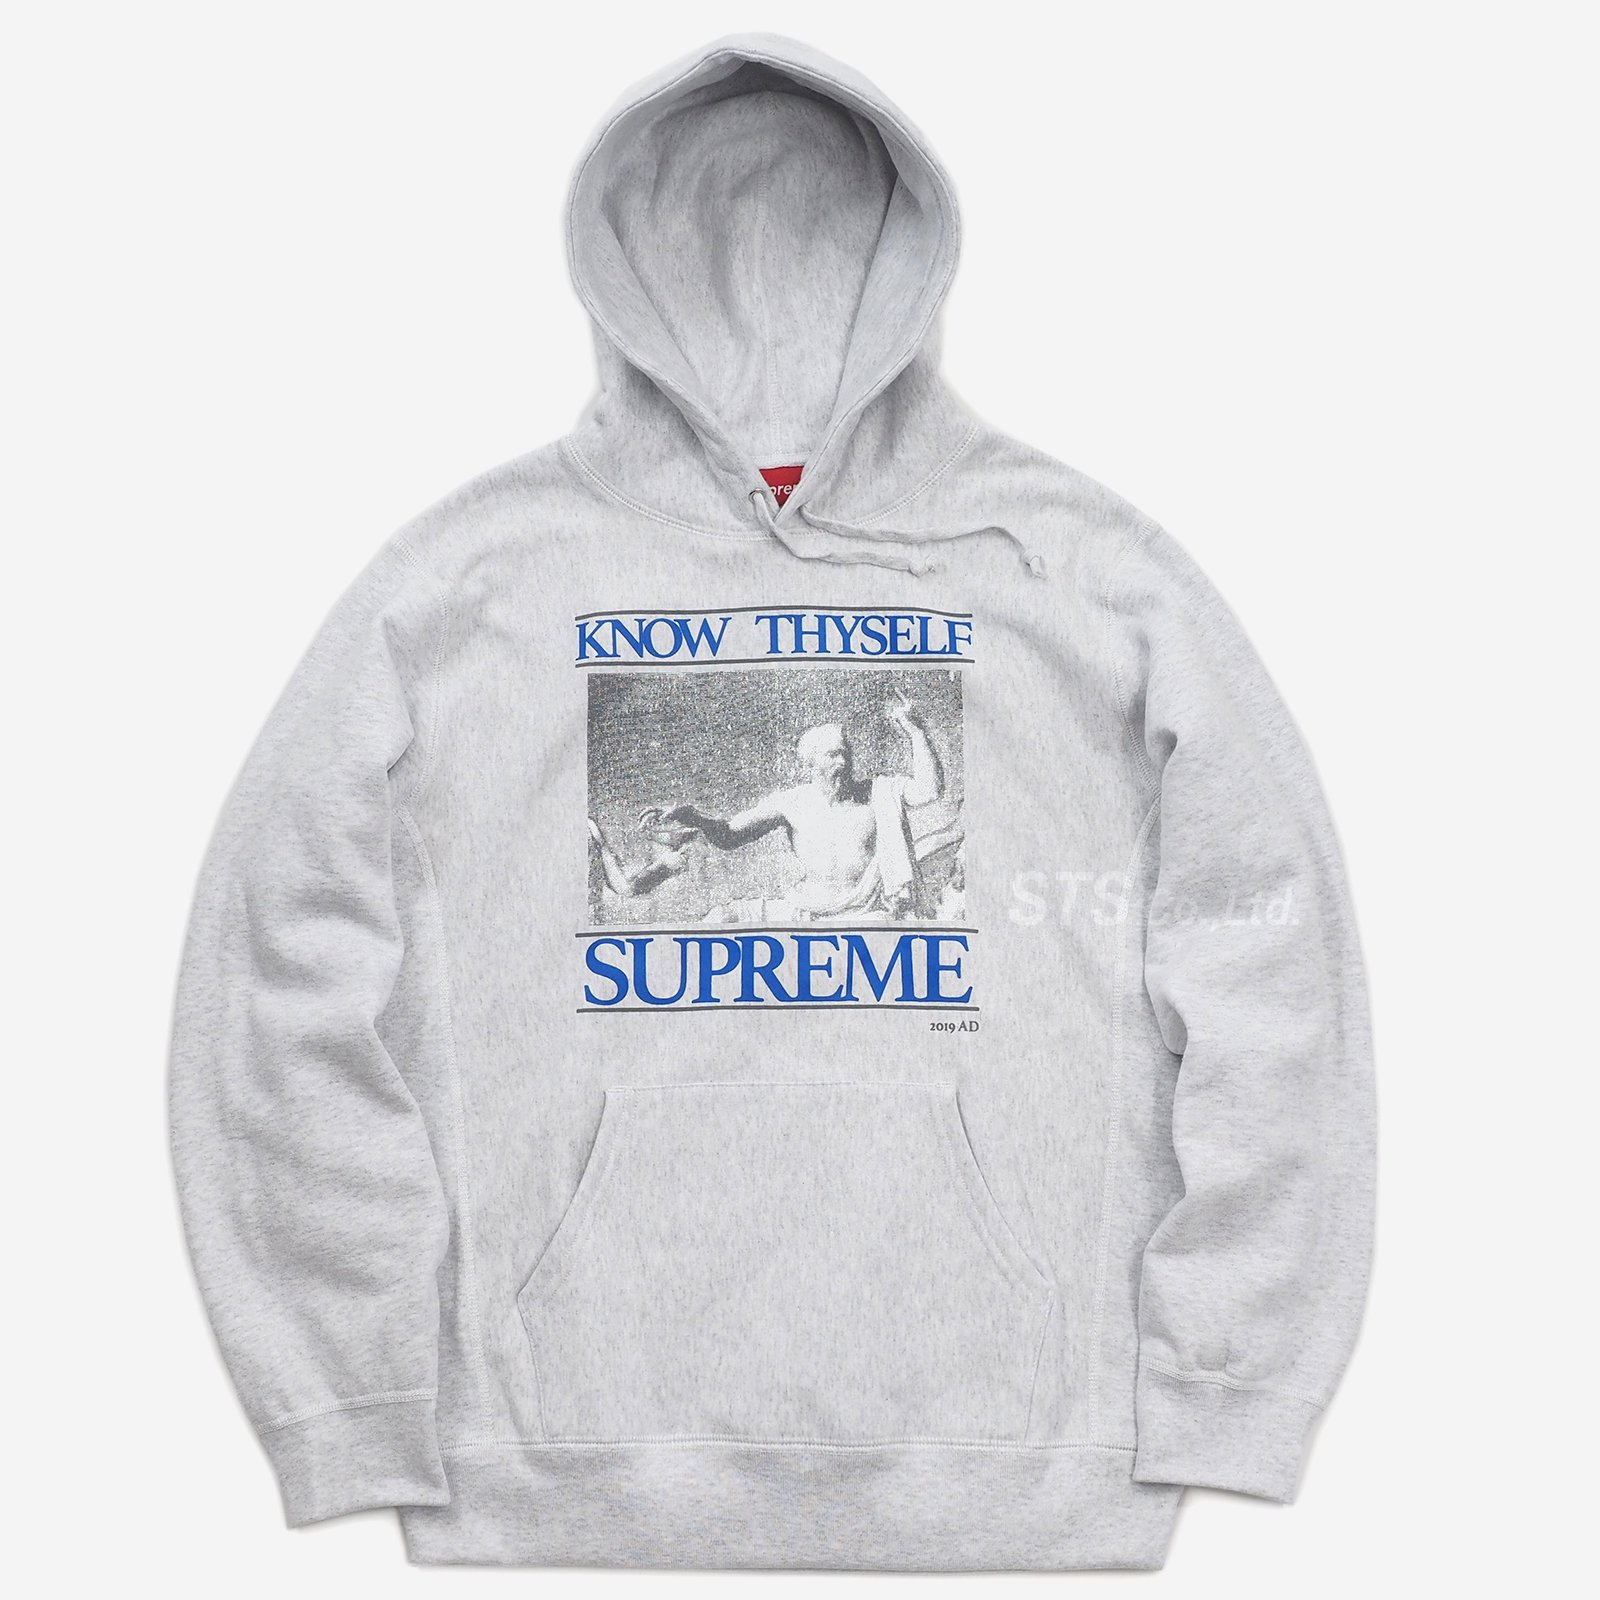 Supreme - Know Thyself Hooded Sweatshirt - UG.SHAFT